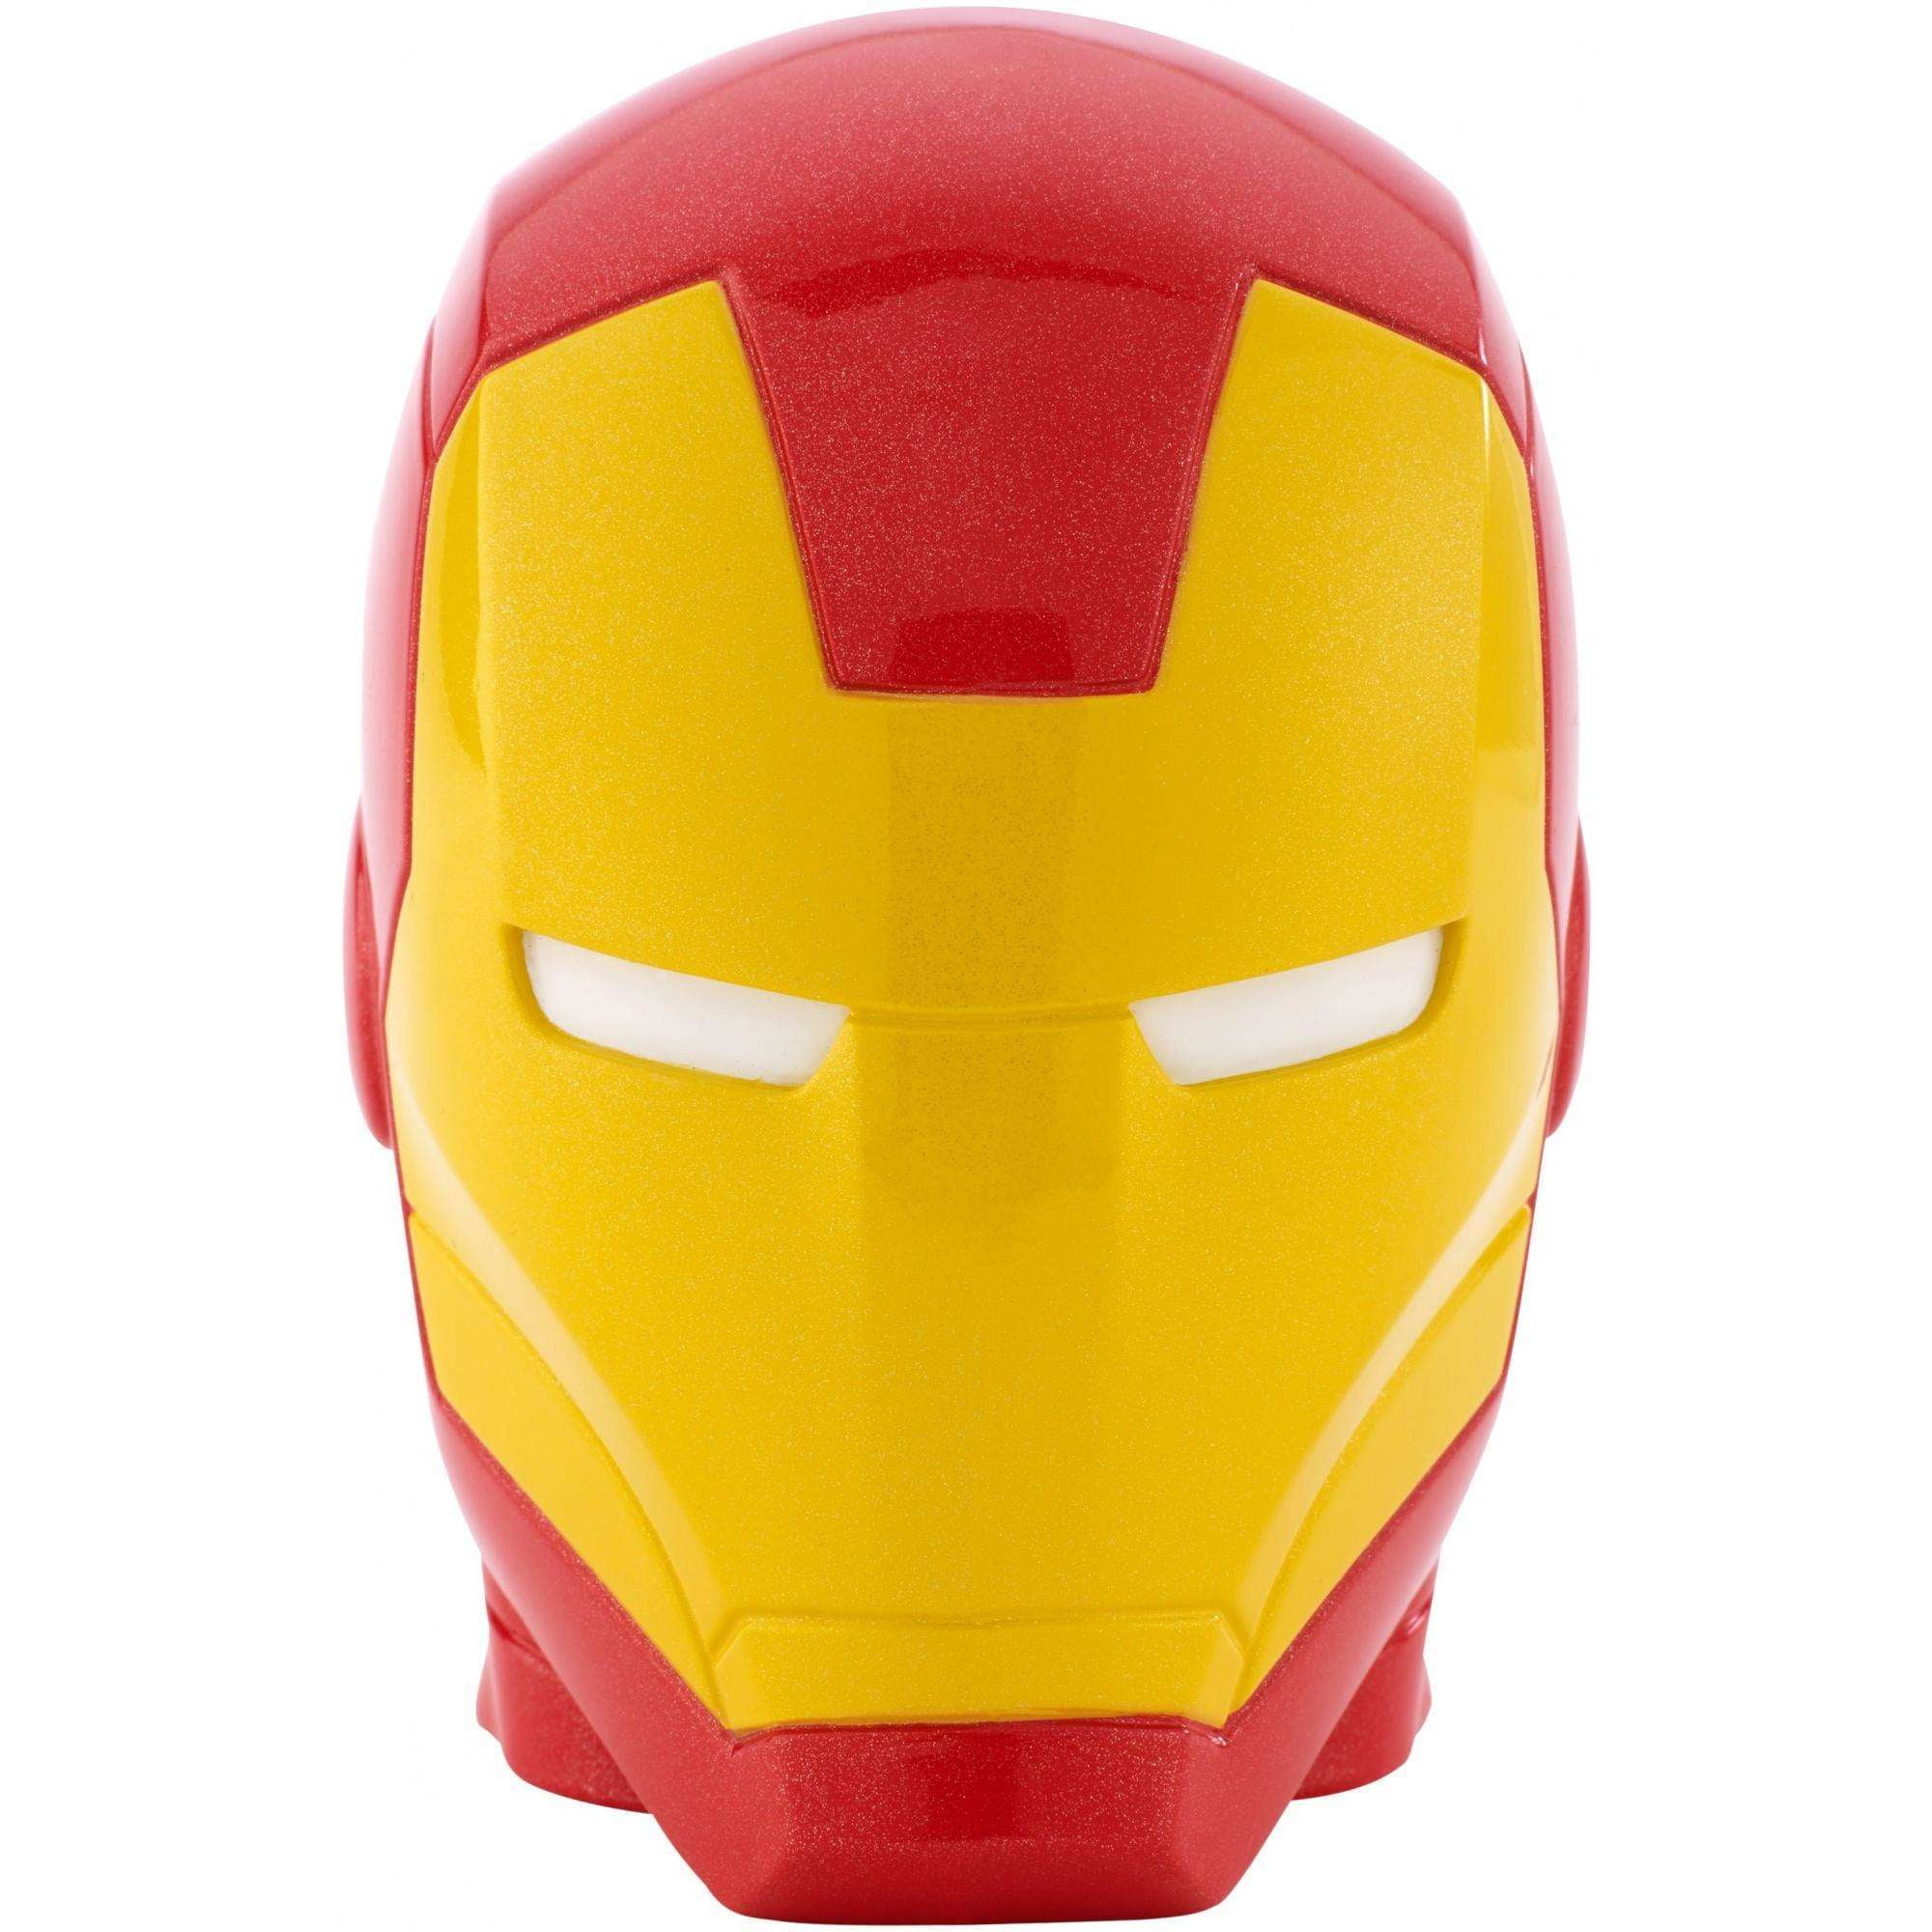 Marvel Avengers Magic 20 Ball Iron Man Fortune Telling Novelty Toy